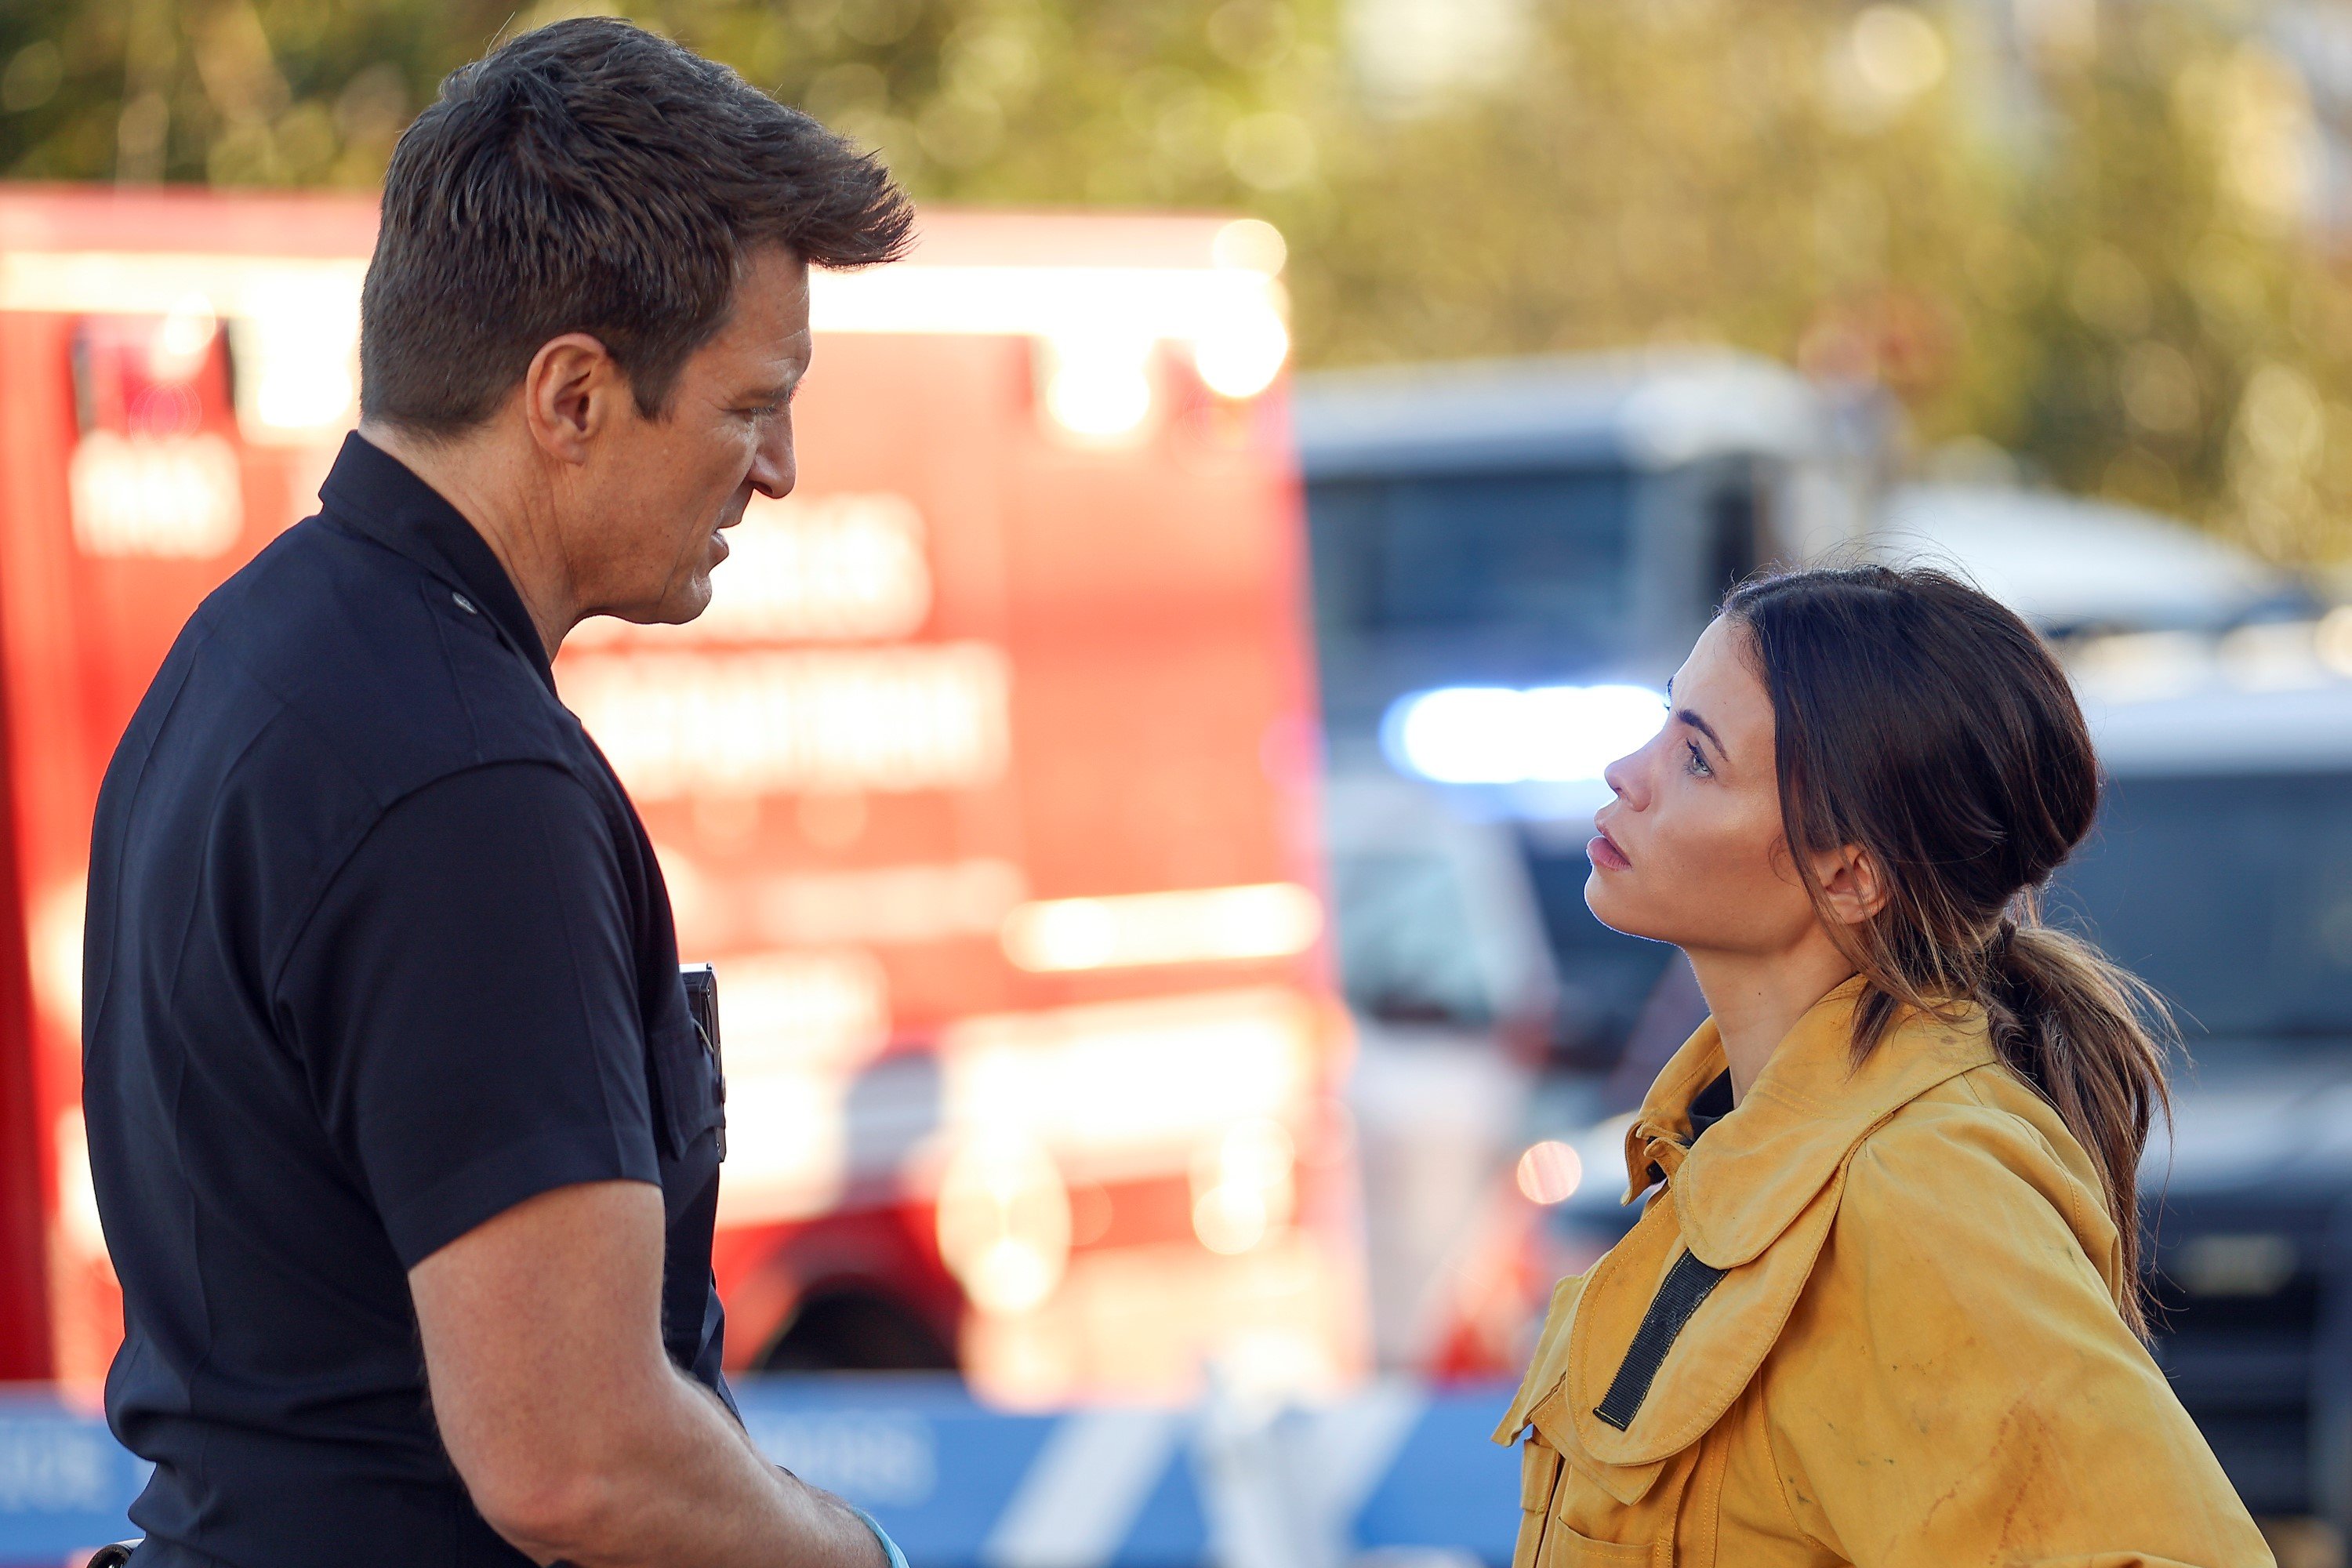 Nathan Fillion as John Nolan and Jenna Dewan as Bailey Nune in 'The Rookie' on ABC. John wears his dark blue police uniform. Bailey wears her yellow firefighter jacket.